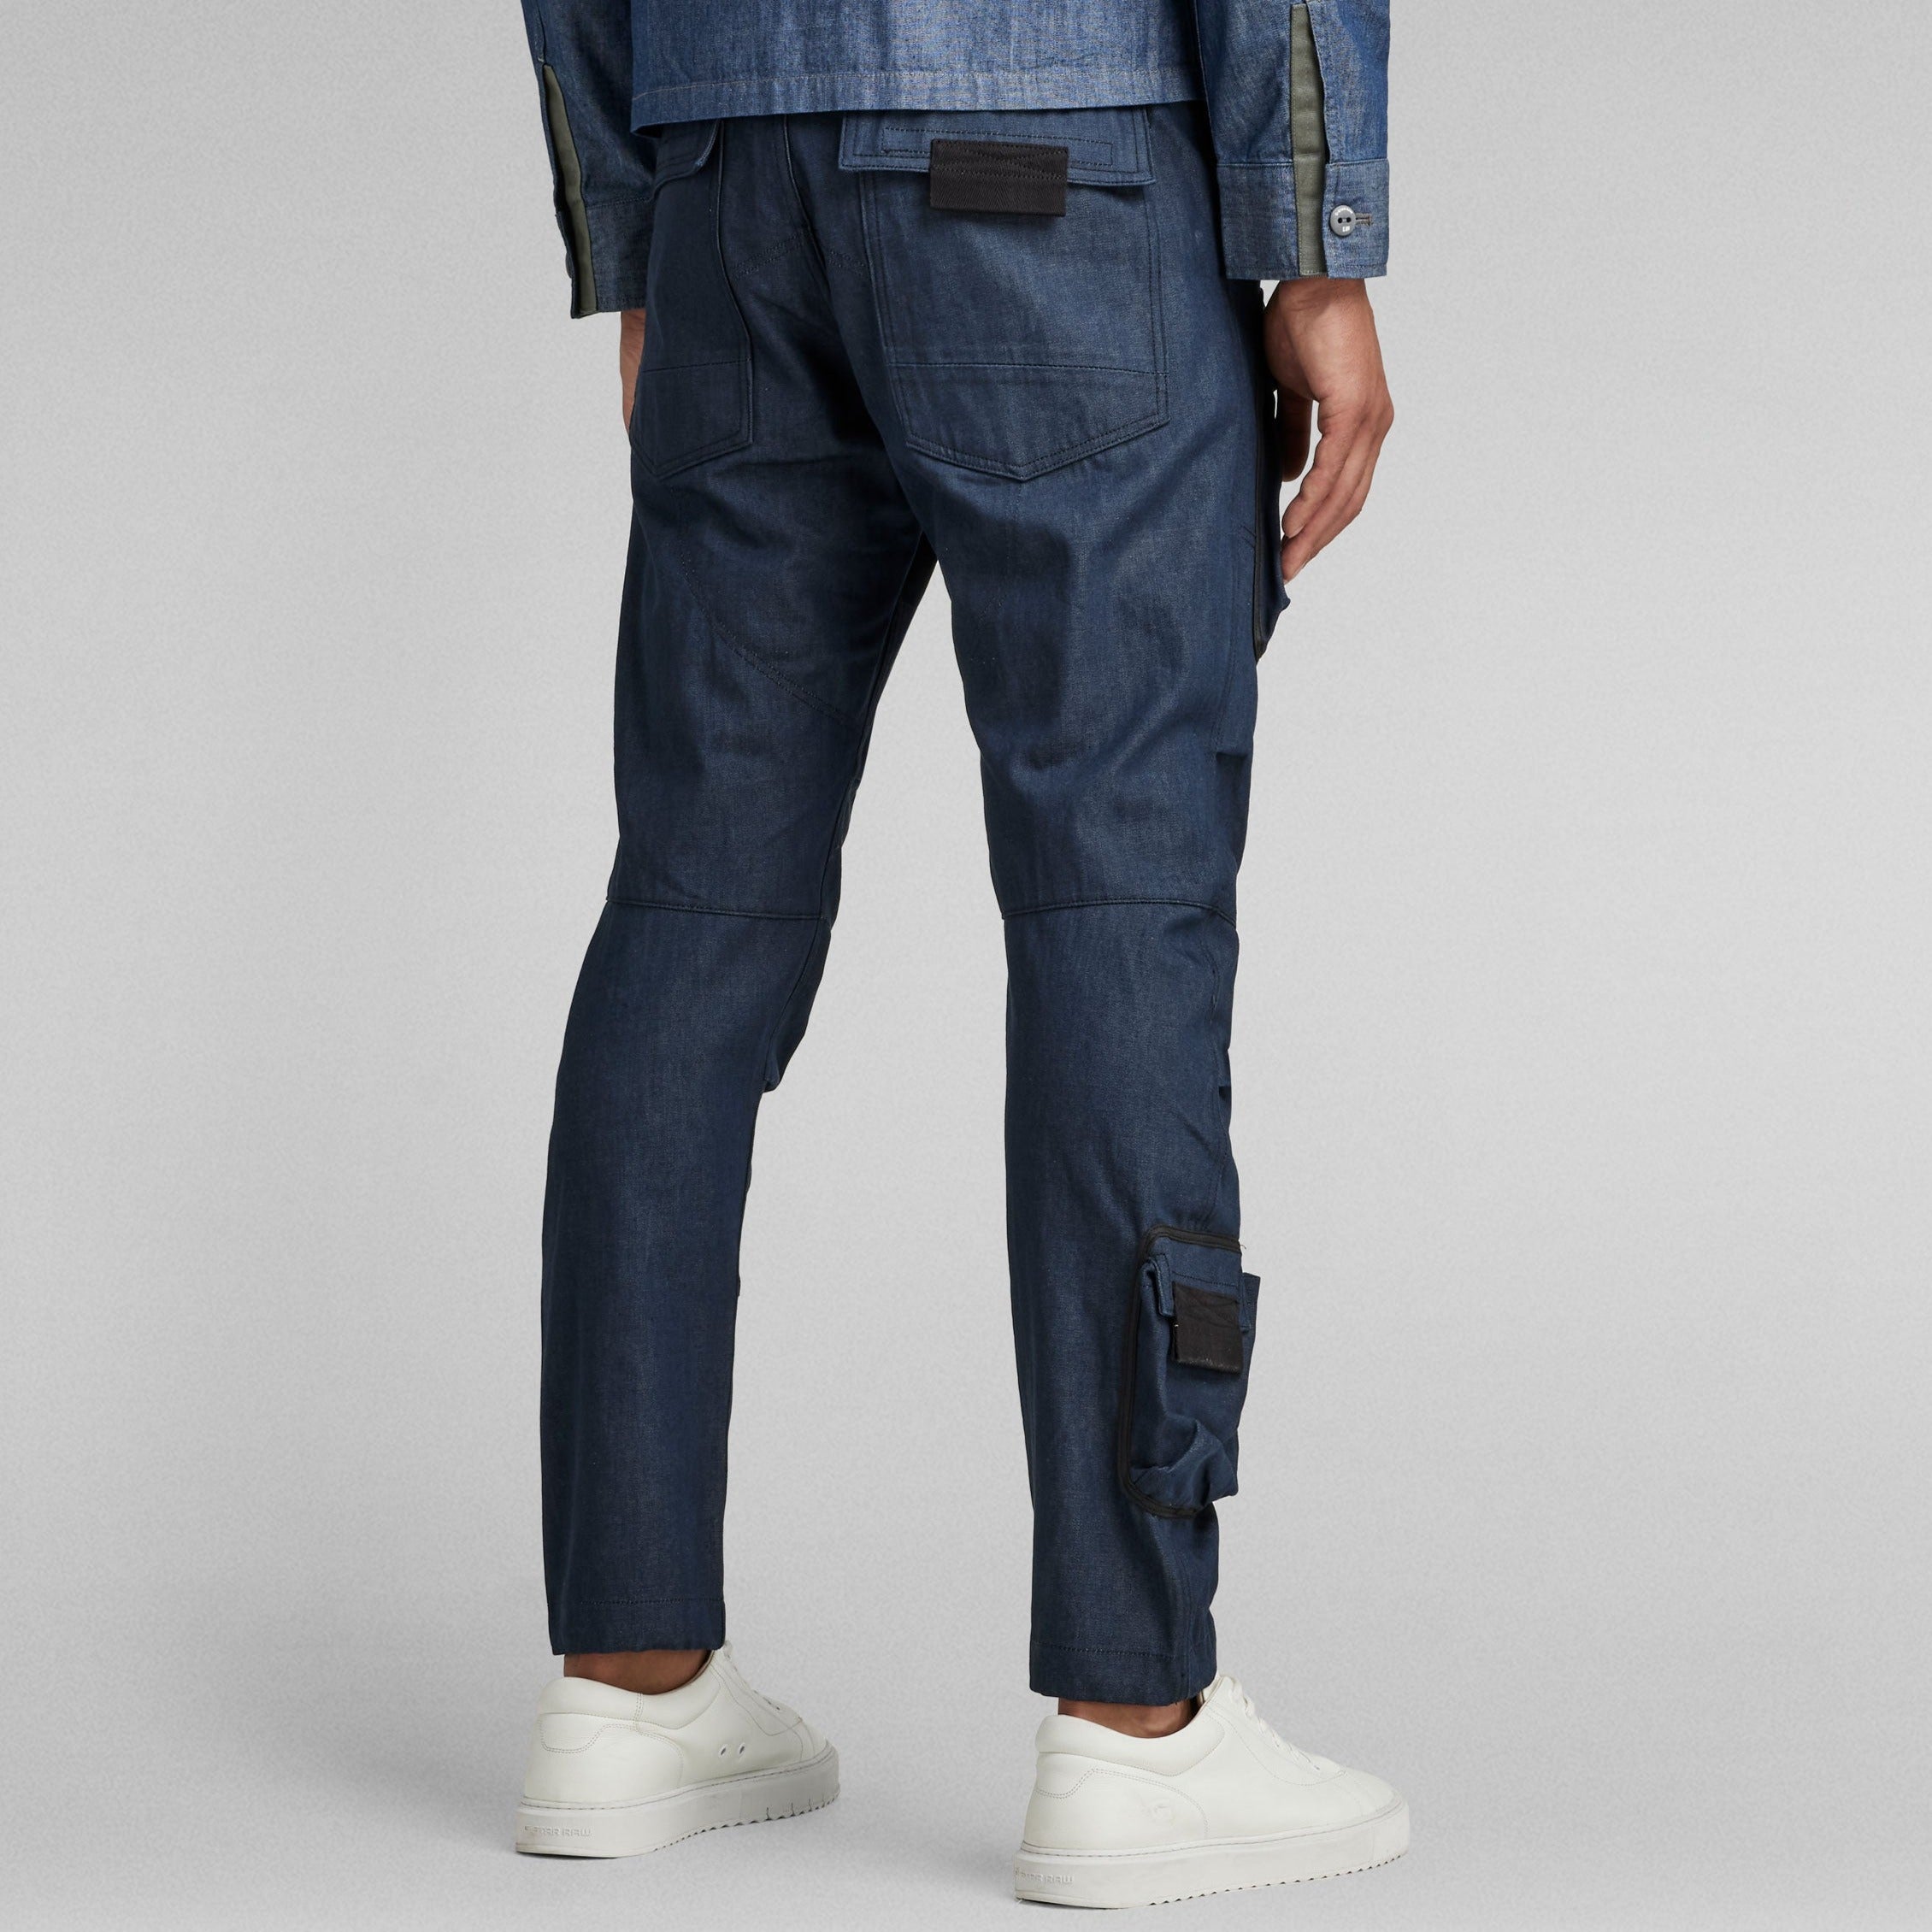 G-star Raw 96 Embroidered Denim 3D Slim Taper Blue Jeans Pants W31L31 - Etsy